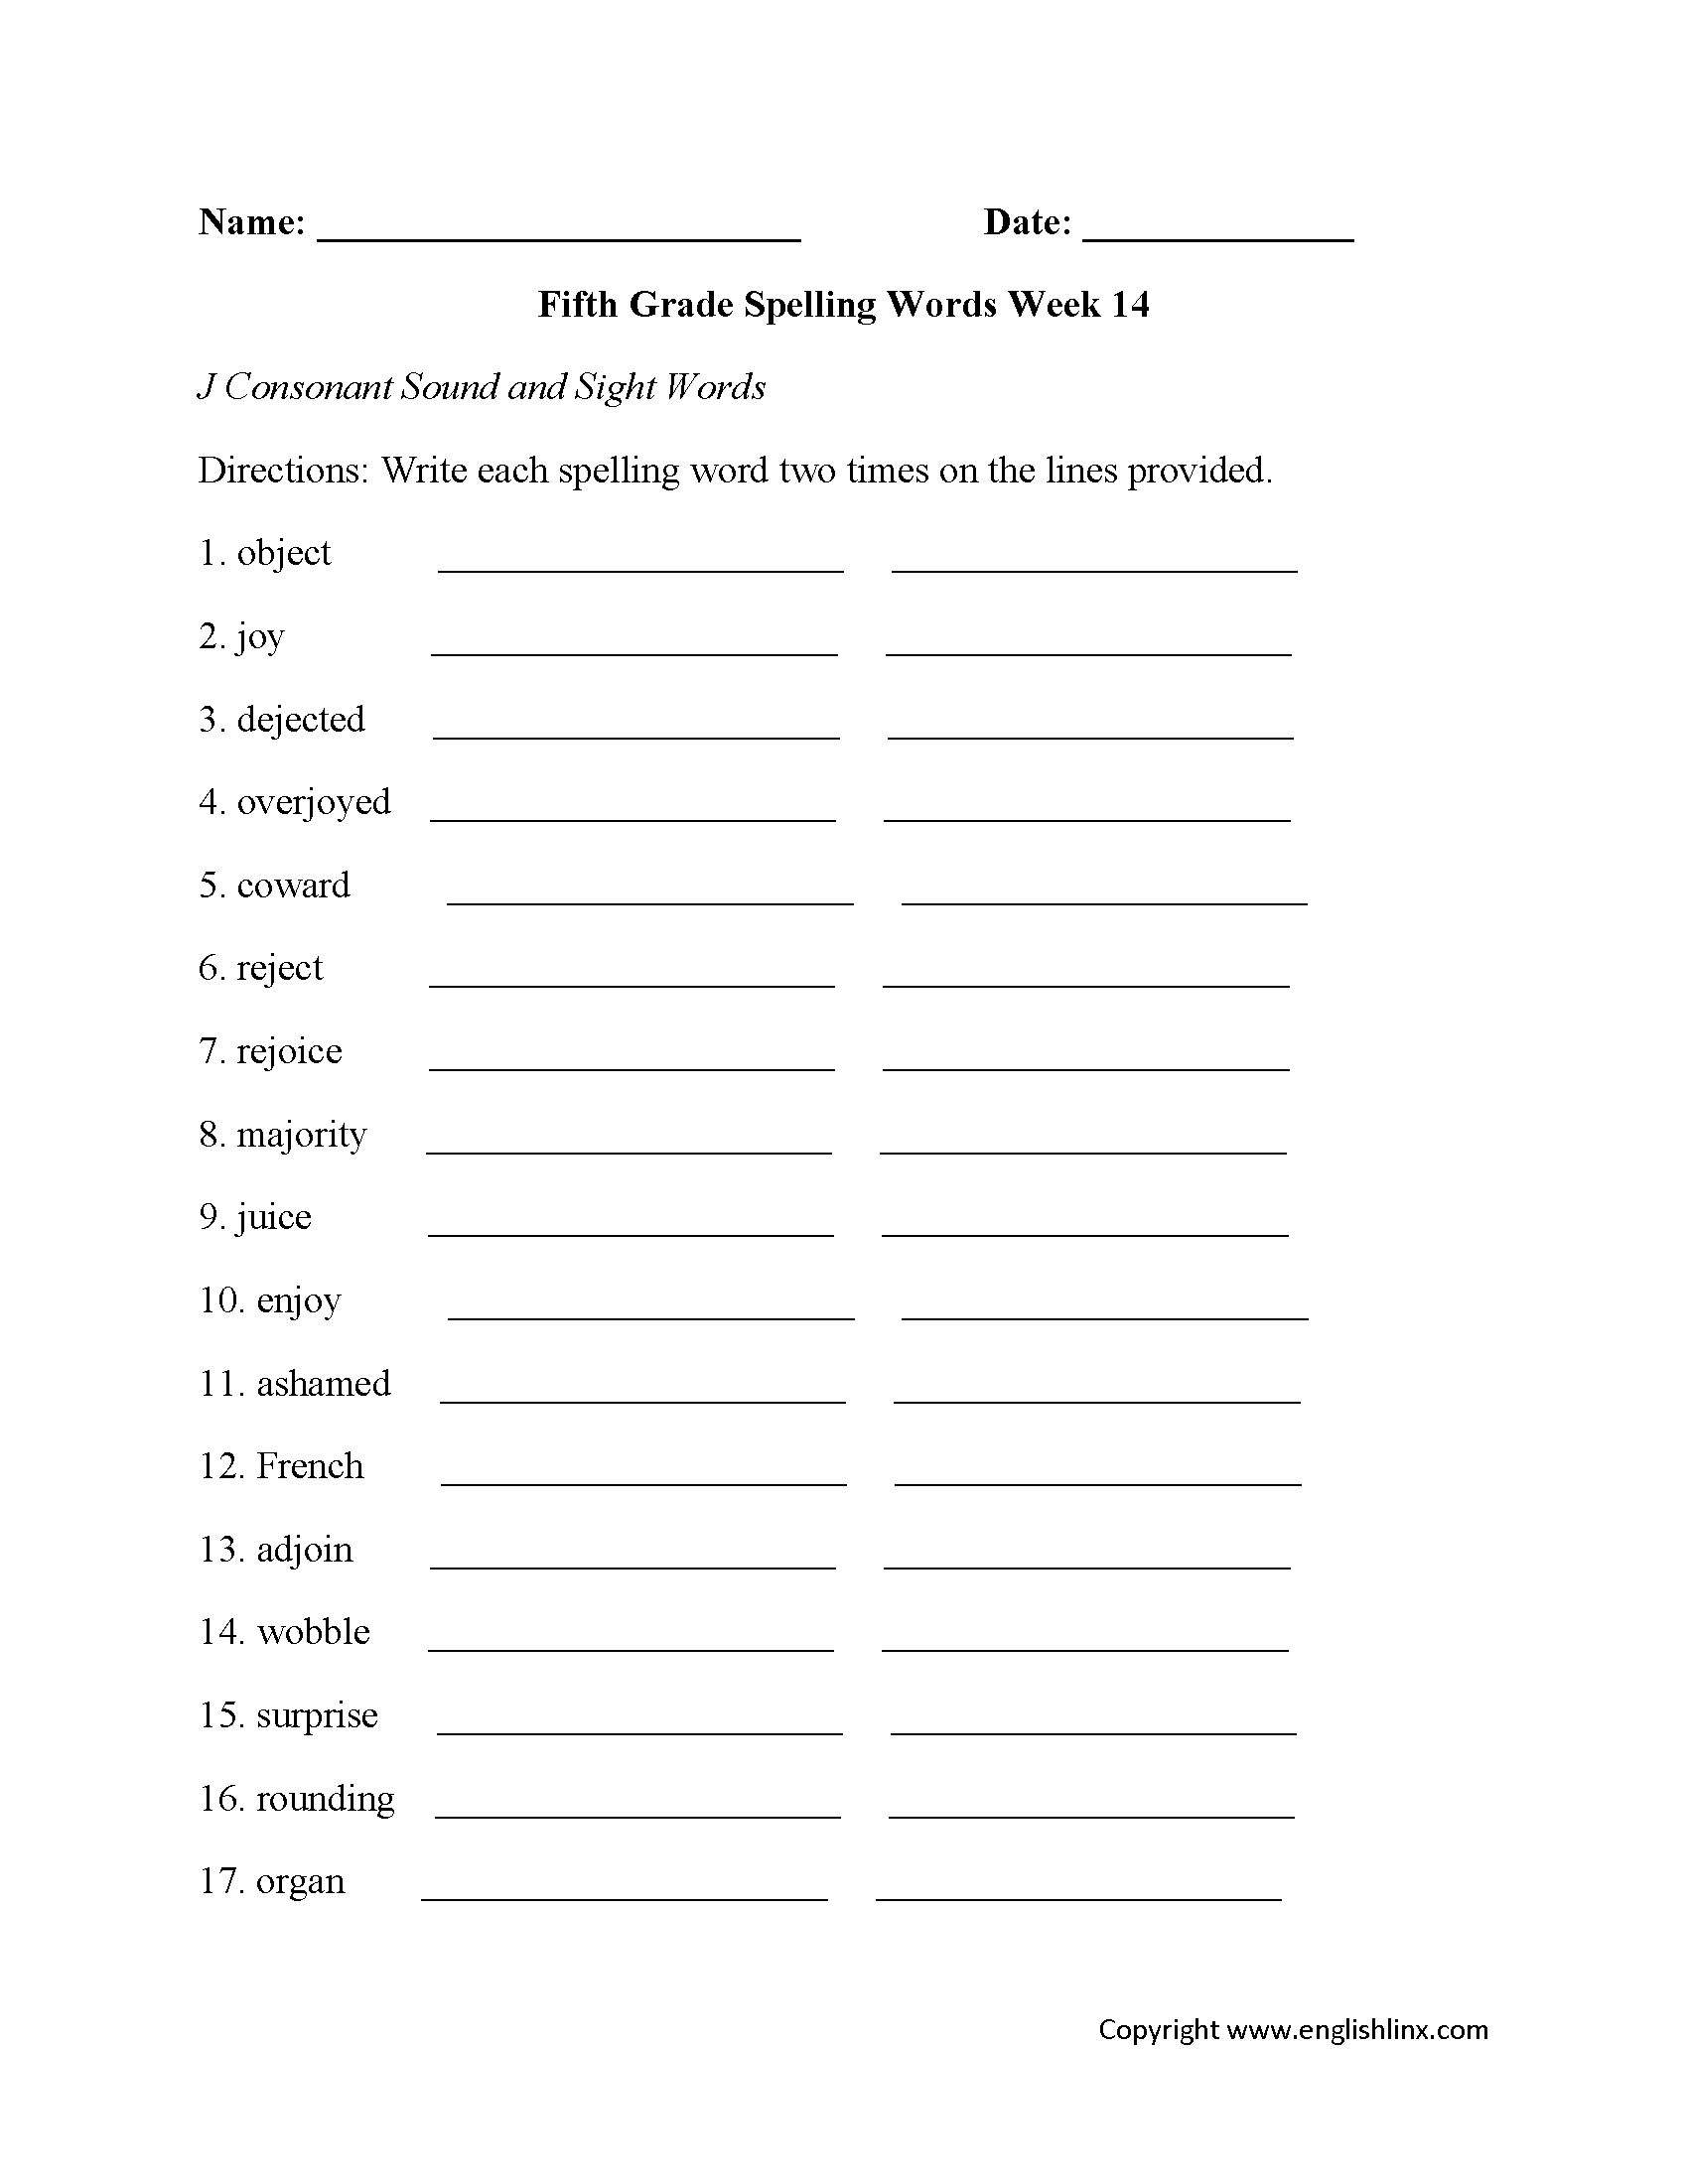 Spelling Worksheets  Fifth Grade Spelling Worksheets